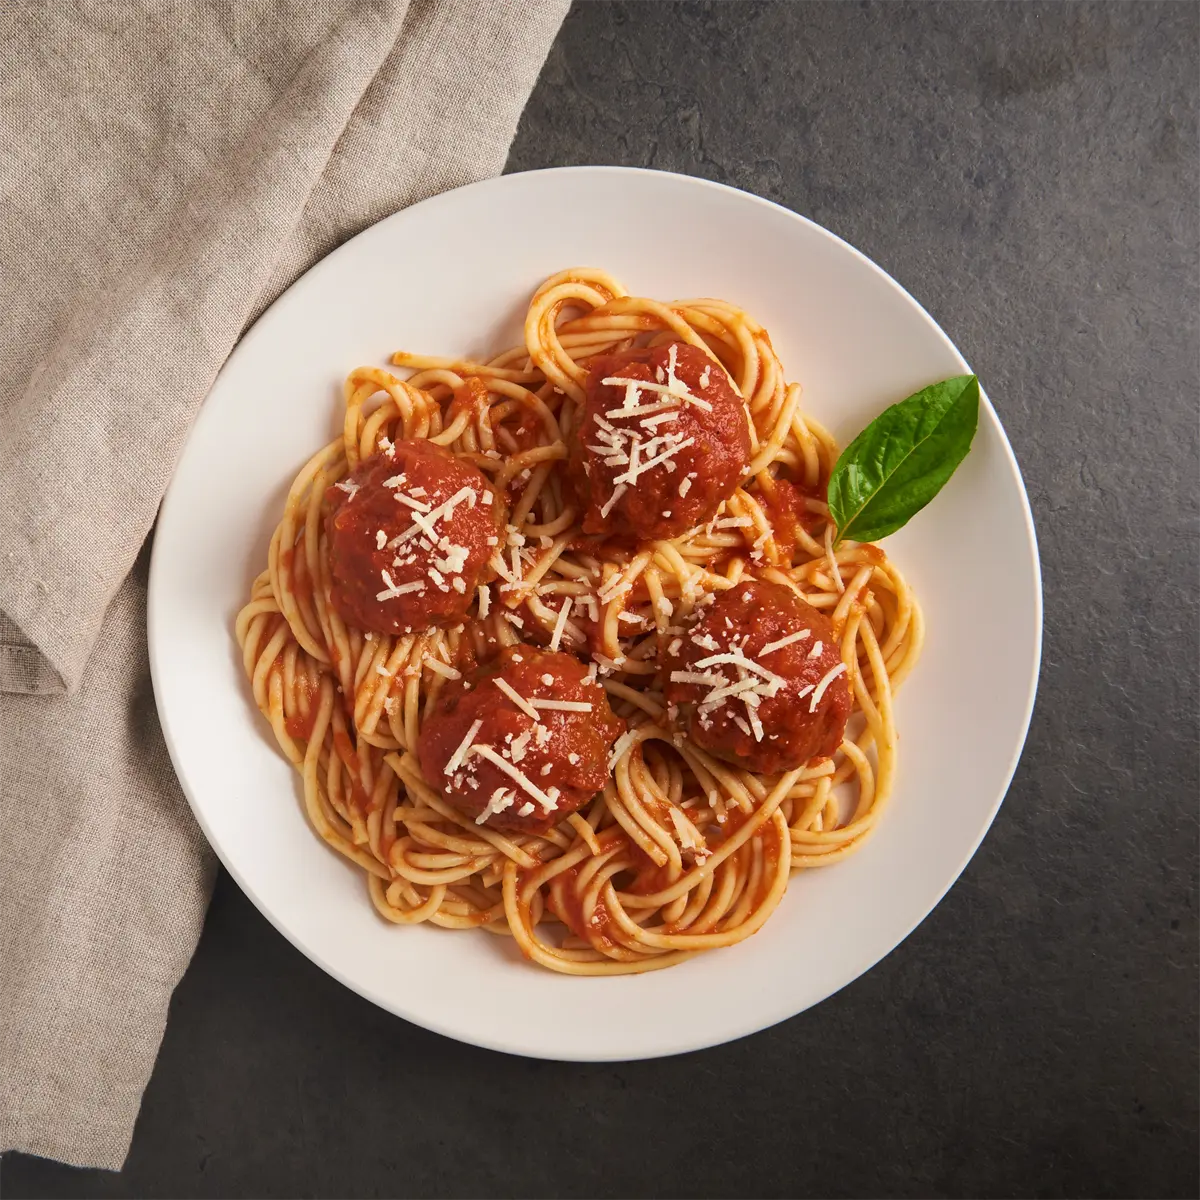 Turkey Meatballs in Italian Style Sauce (6 1lb Family Meals)